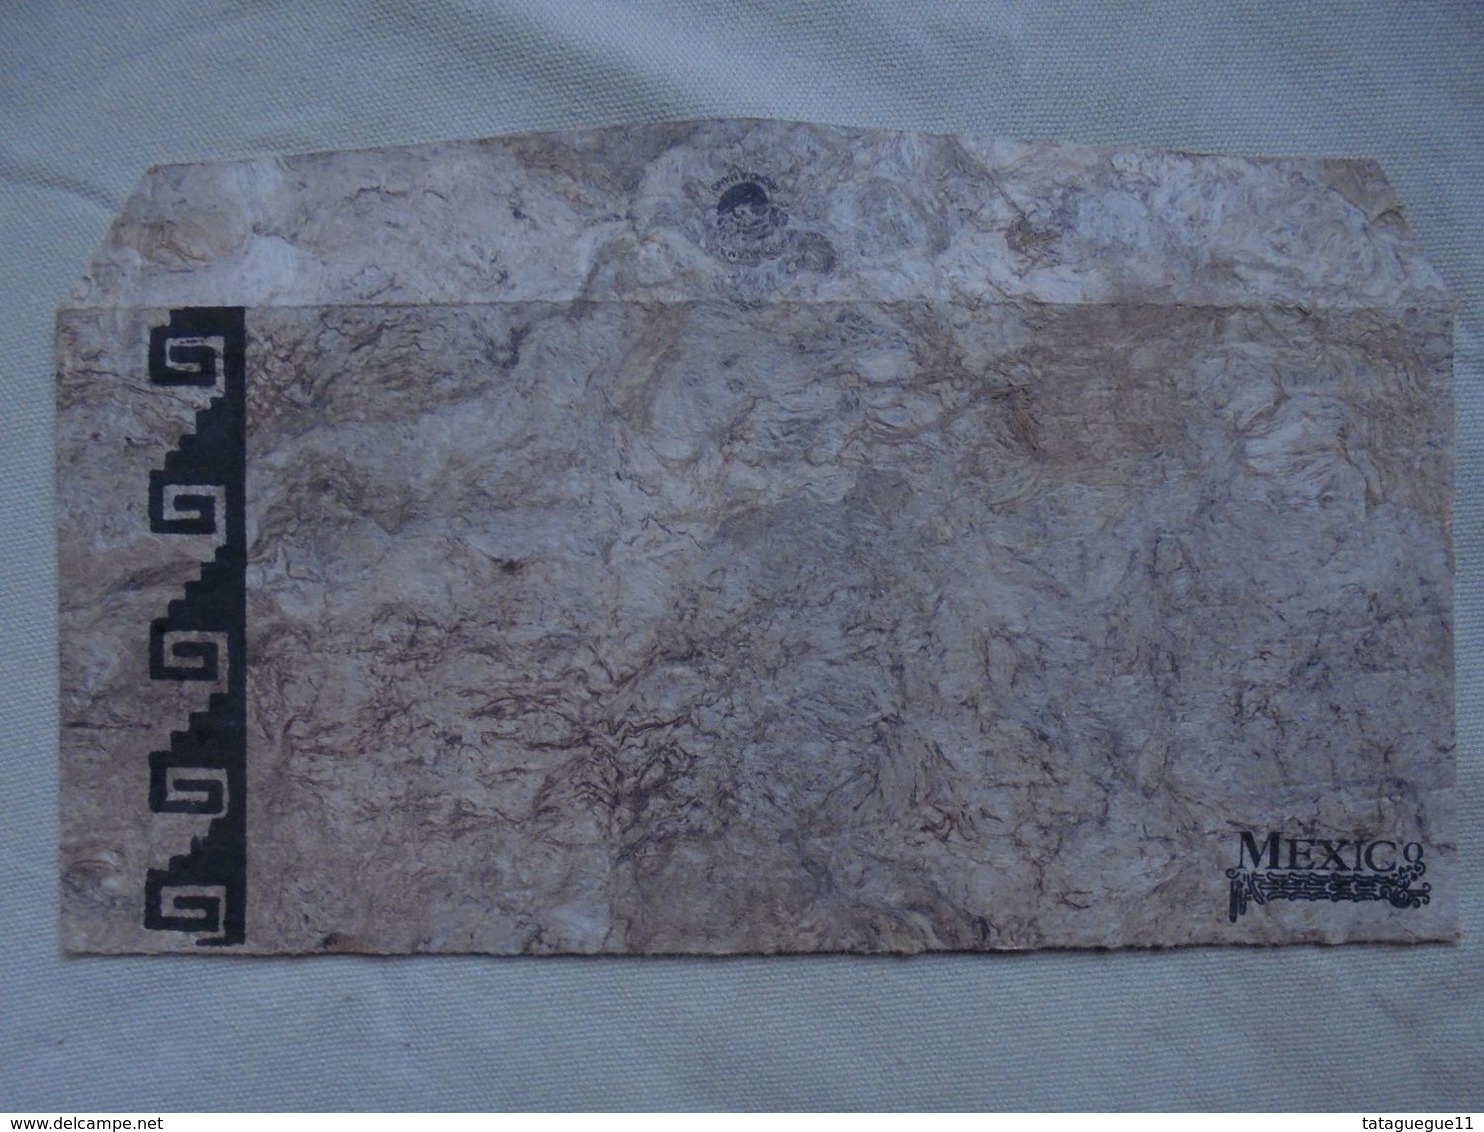 Carte & Enveloppe En Papier Artisanal Made In Mexico - Obj. 'Remember Of'